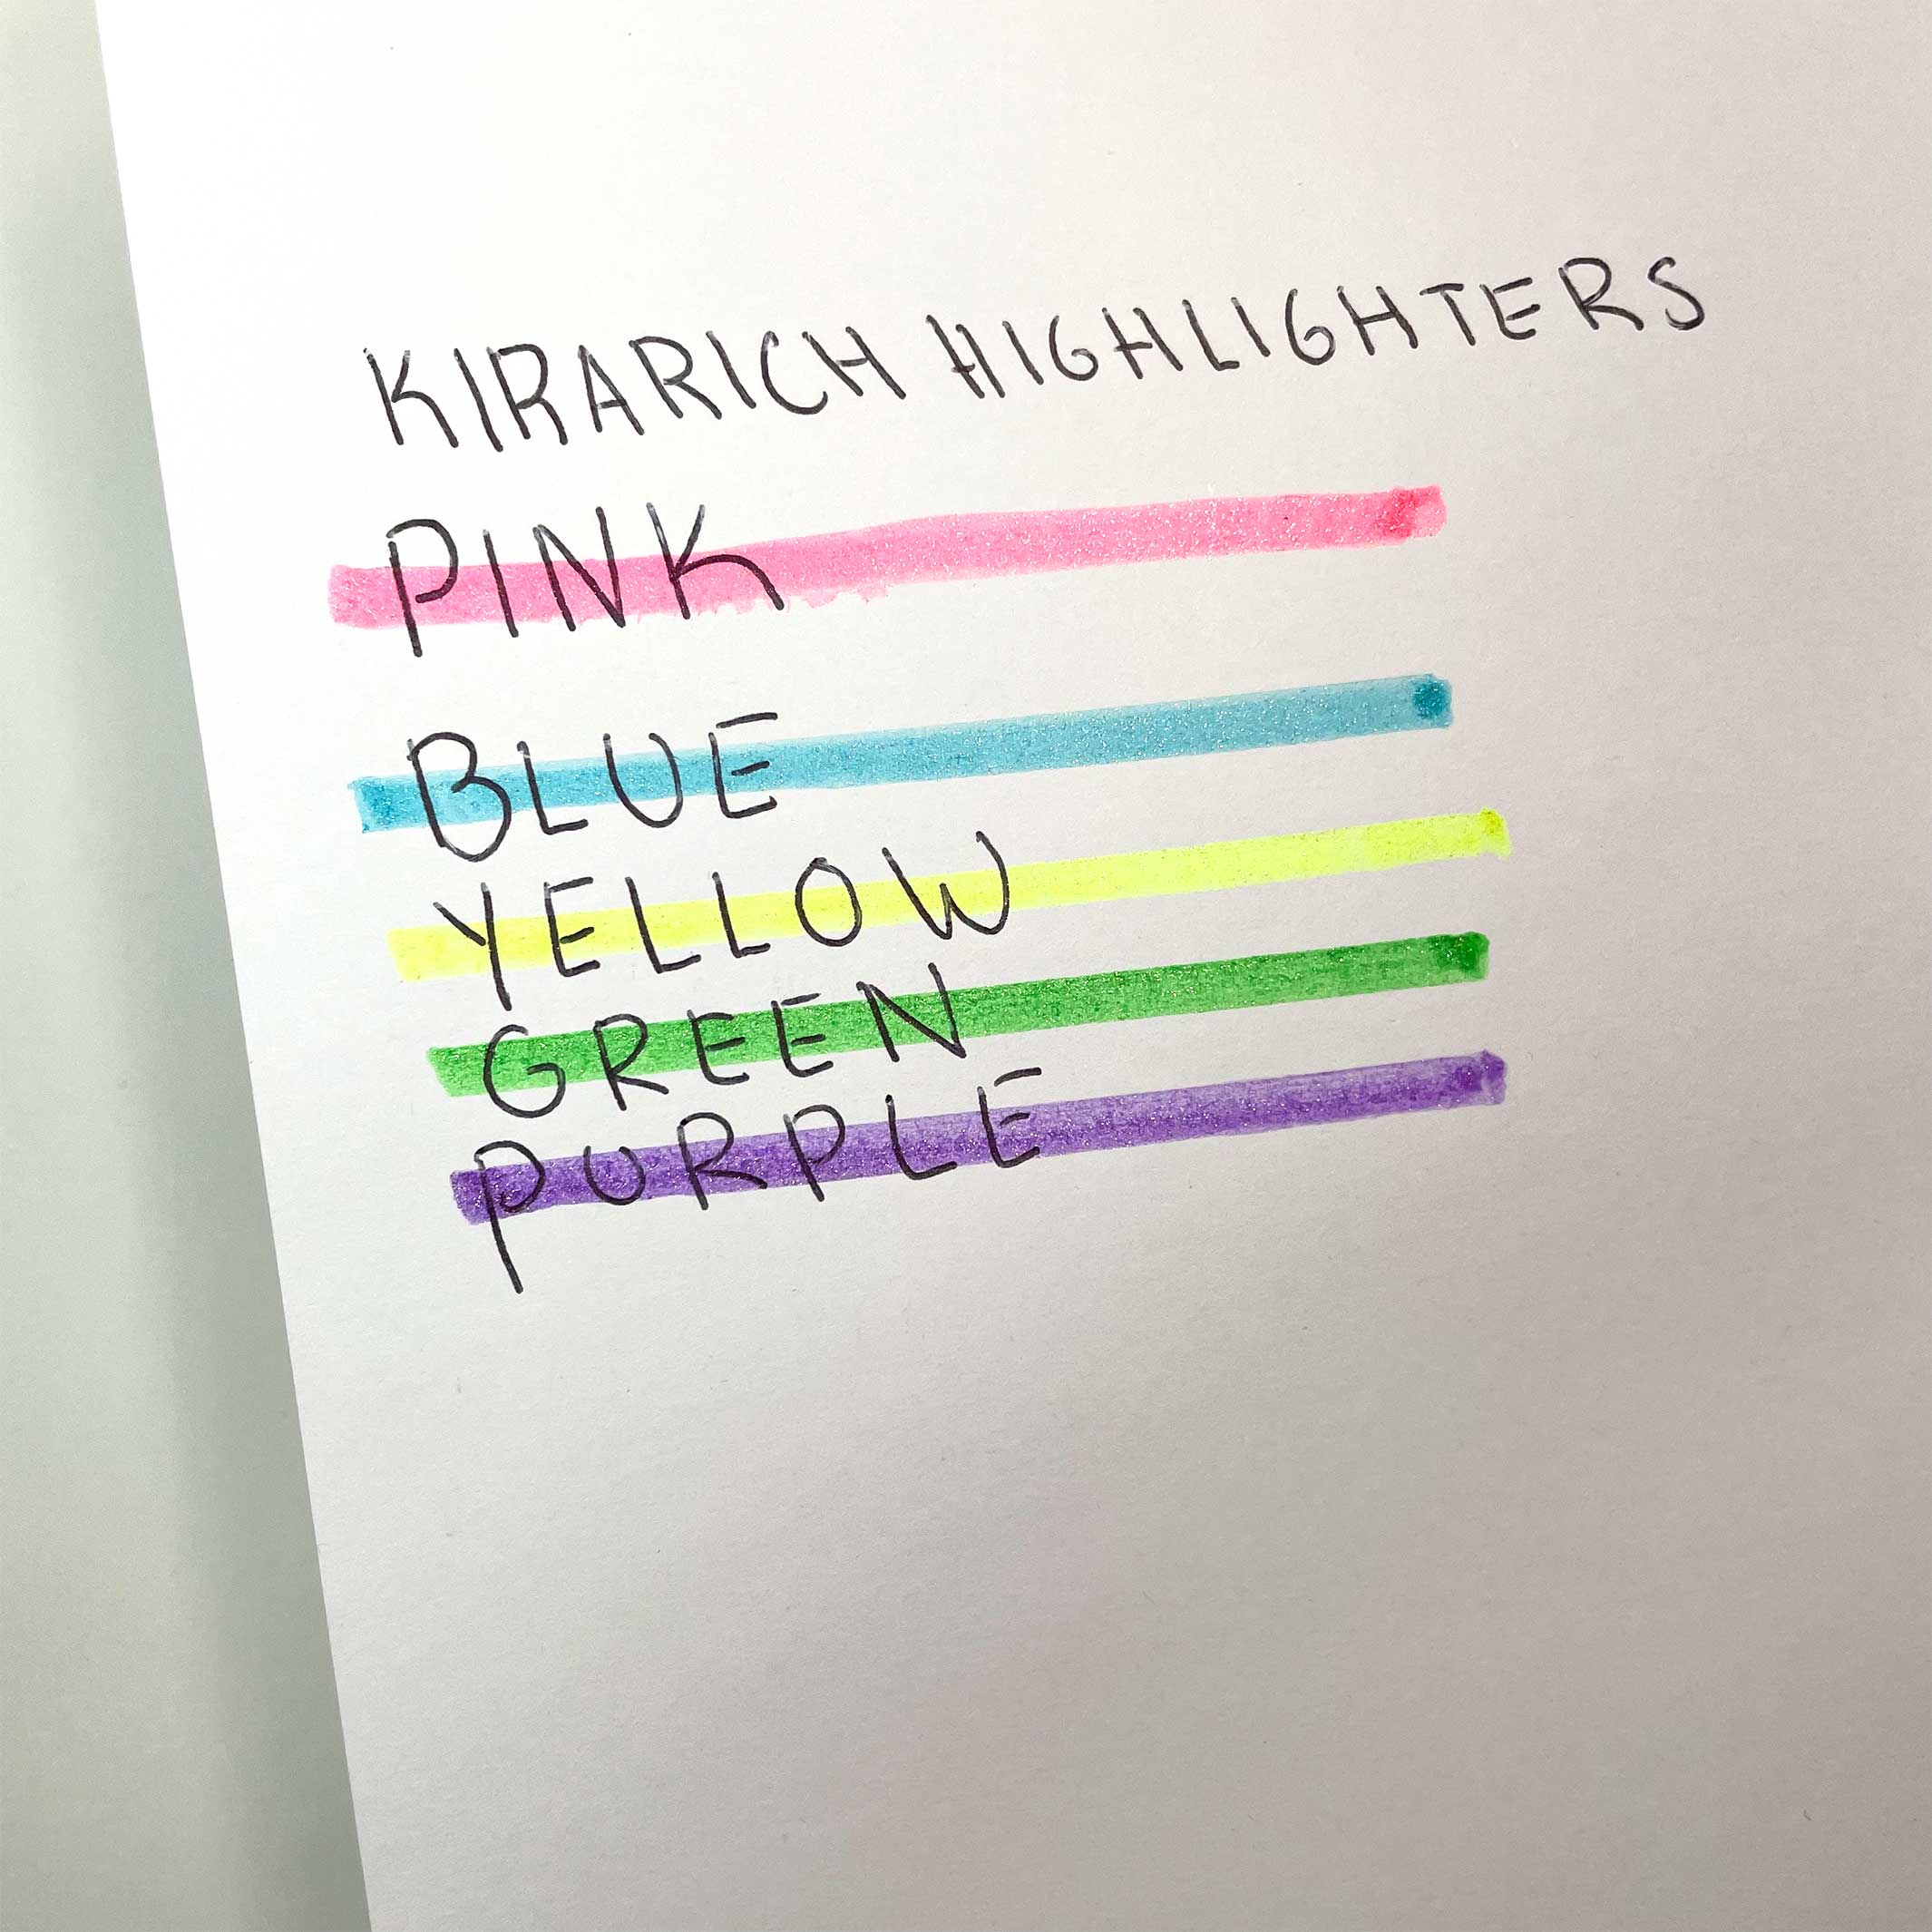 Zebra Kirarich Glitter Highlighters, 5-pack